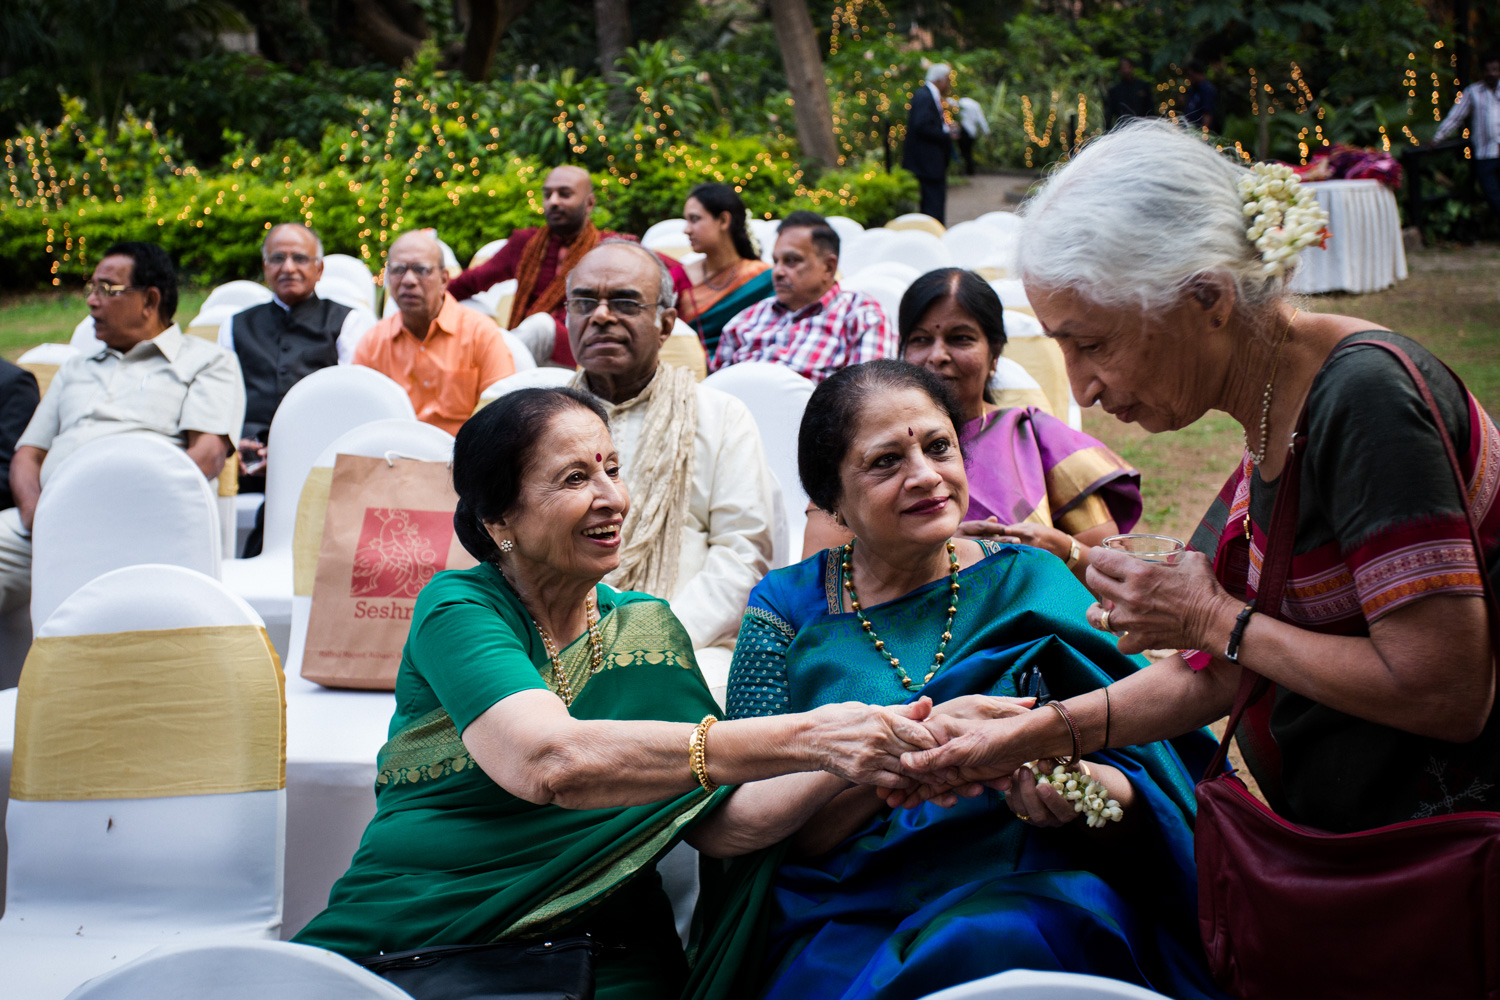 Outdoor Arya Samaj wedding at bangalore dropdstudio weddings